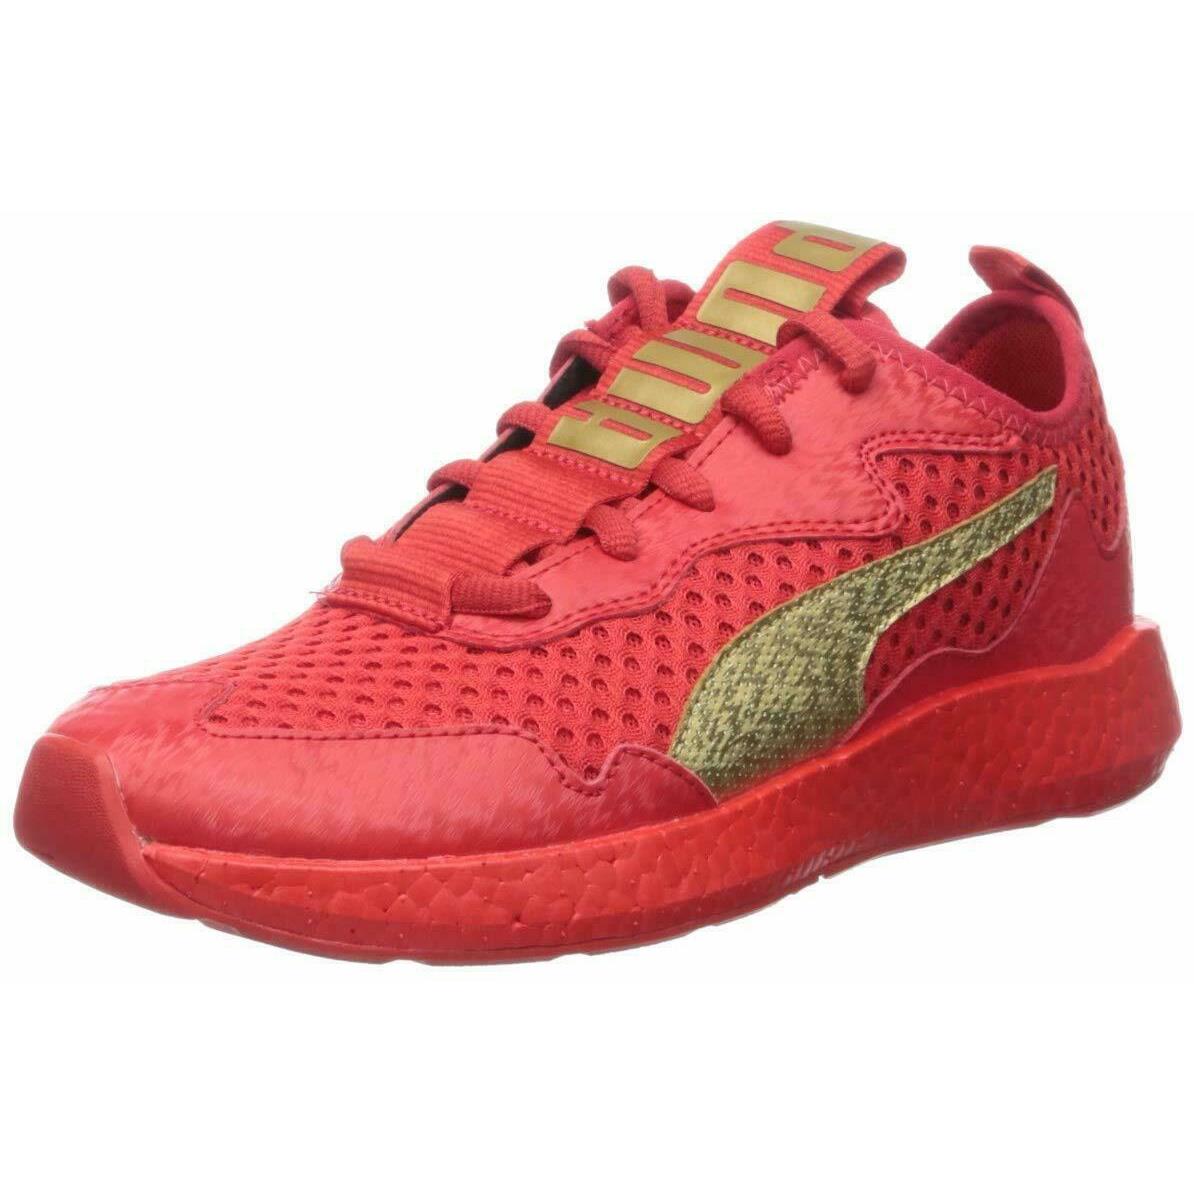 Puma Womens Nrgy Neko Skim Sneaker Red Metallic Accents Fashion Shoe